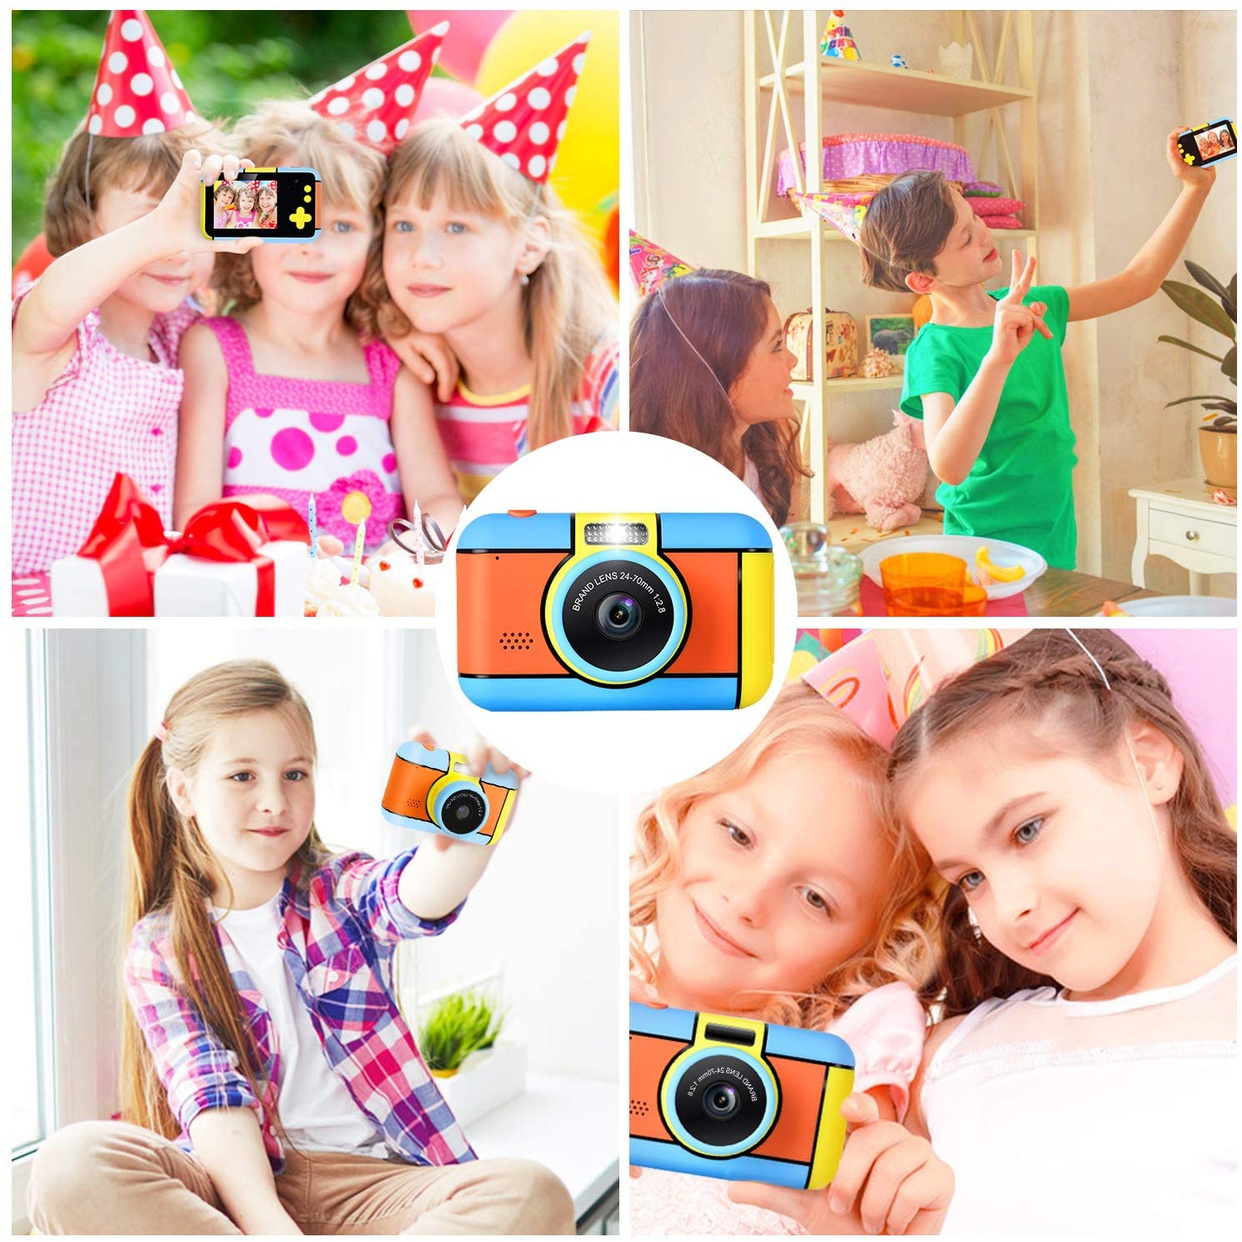 WisFox(ウィスフォックス) 子供用デジタルカメラの商品画像8 